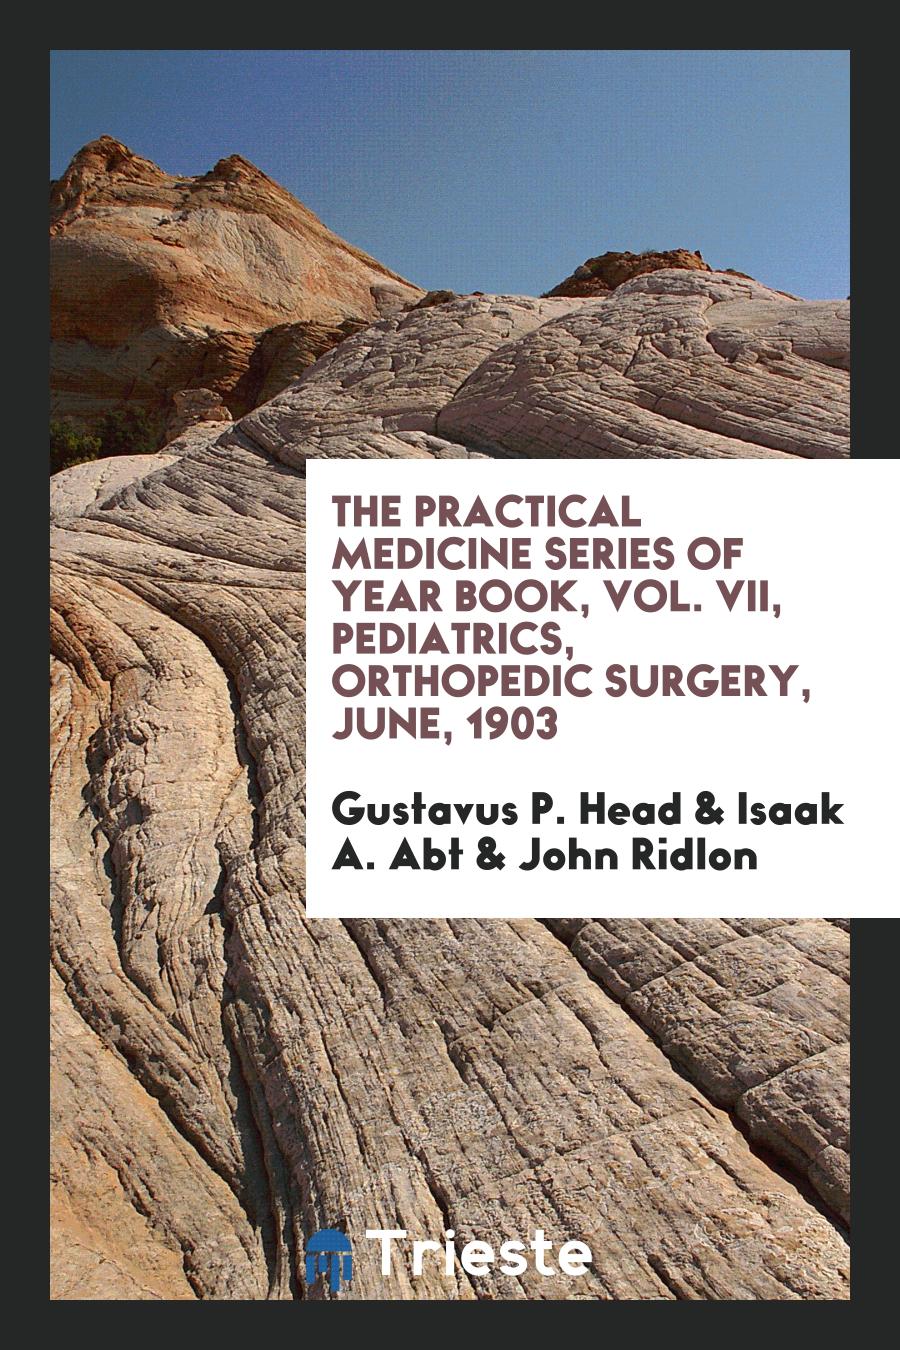 The practical Medicine series of Year Book, Vol. VII, Pediatrics, Orthopedic Surgery, June, 1903